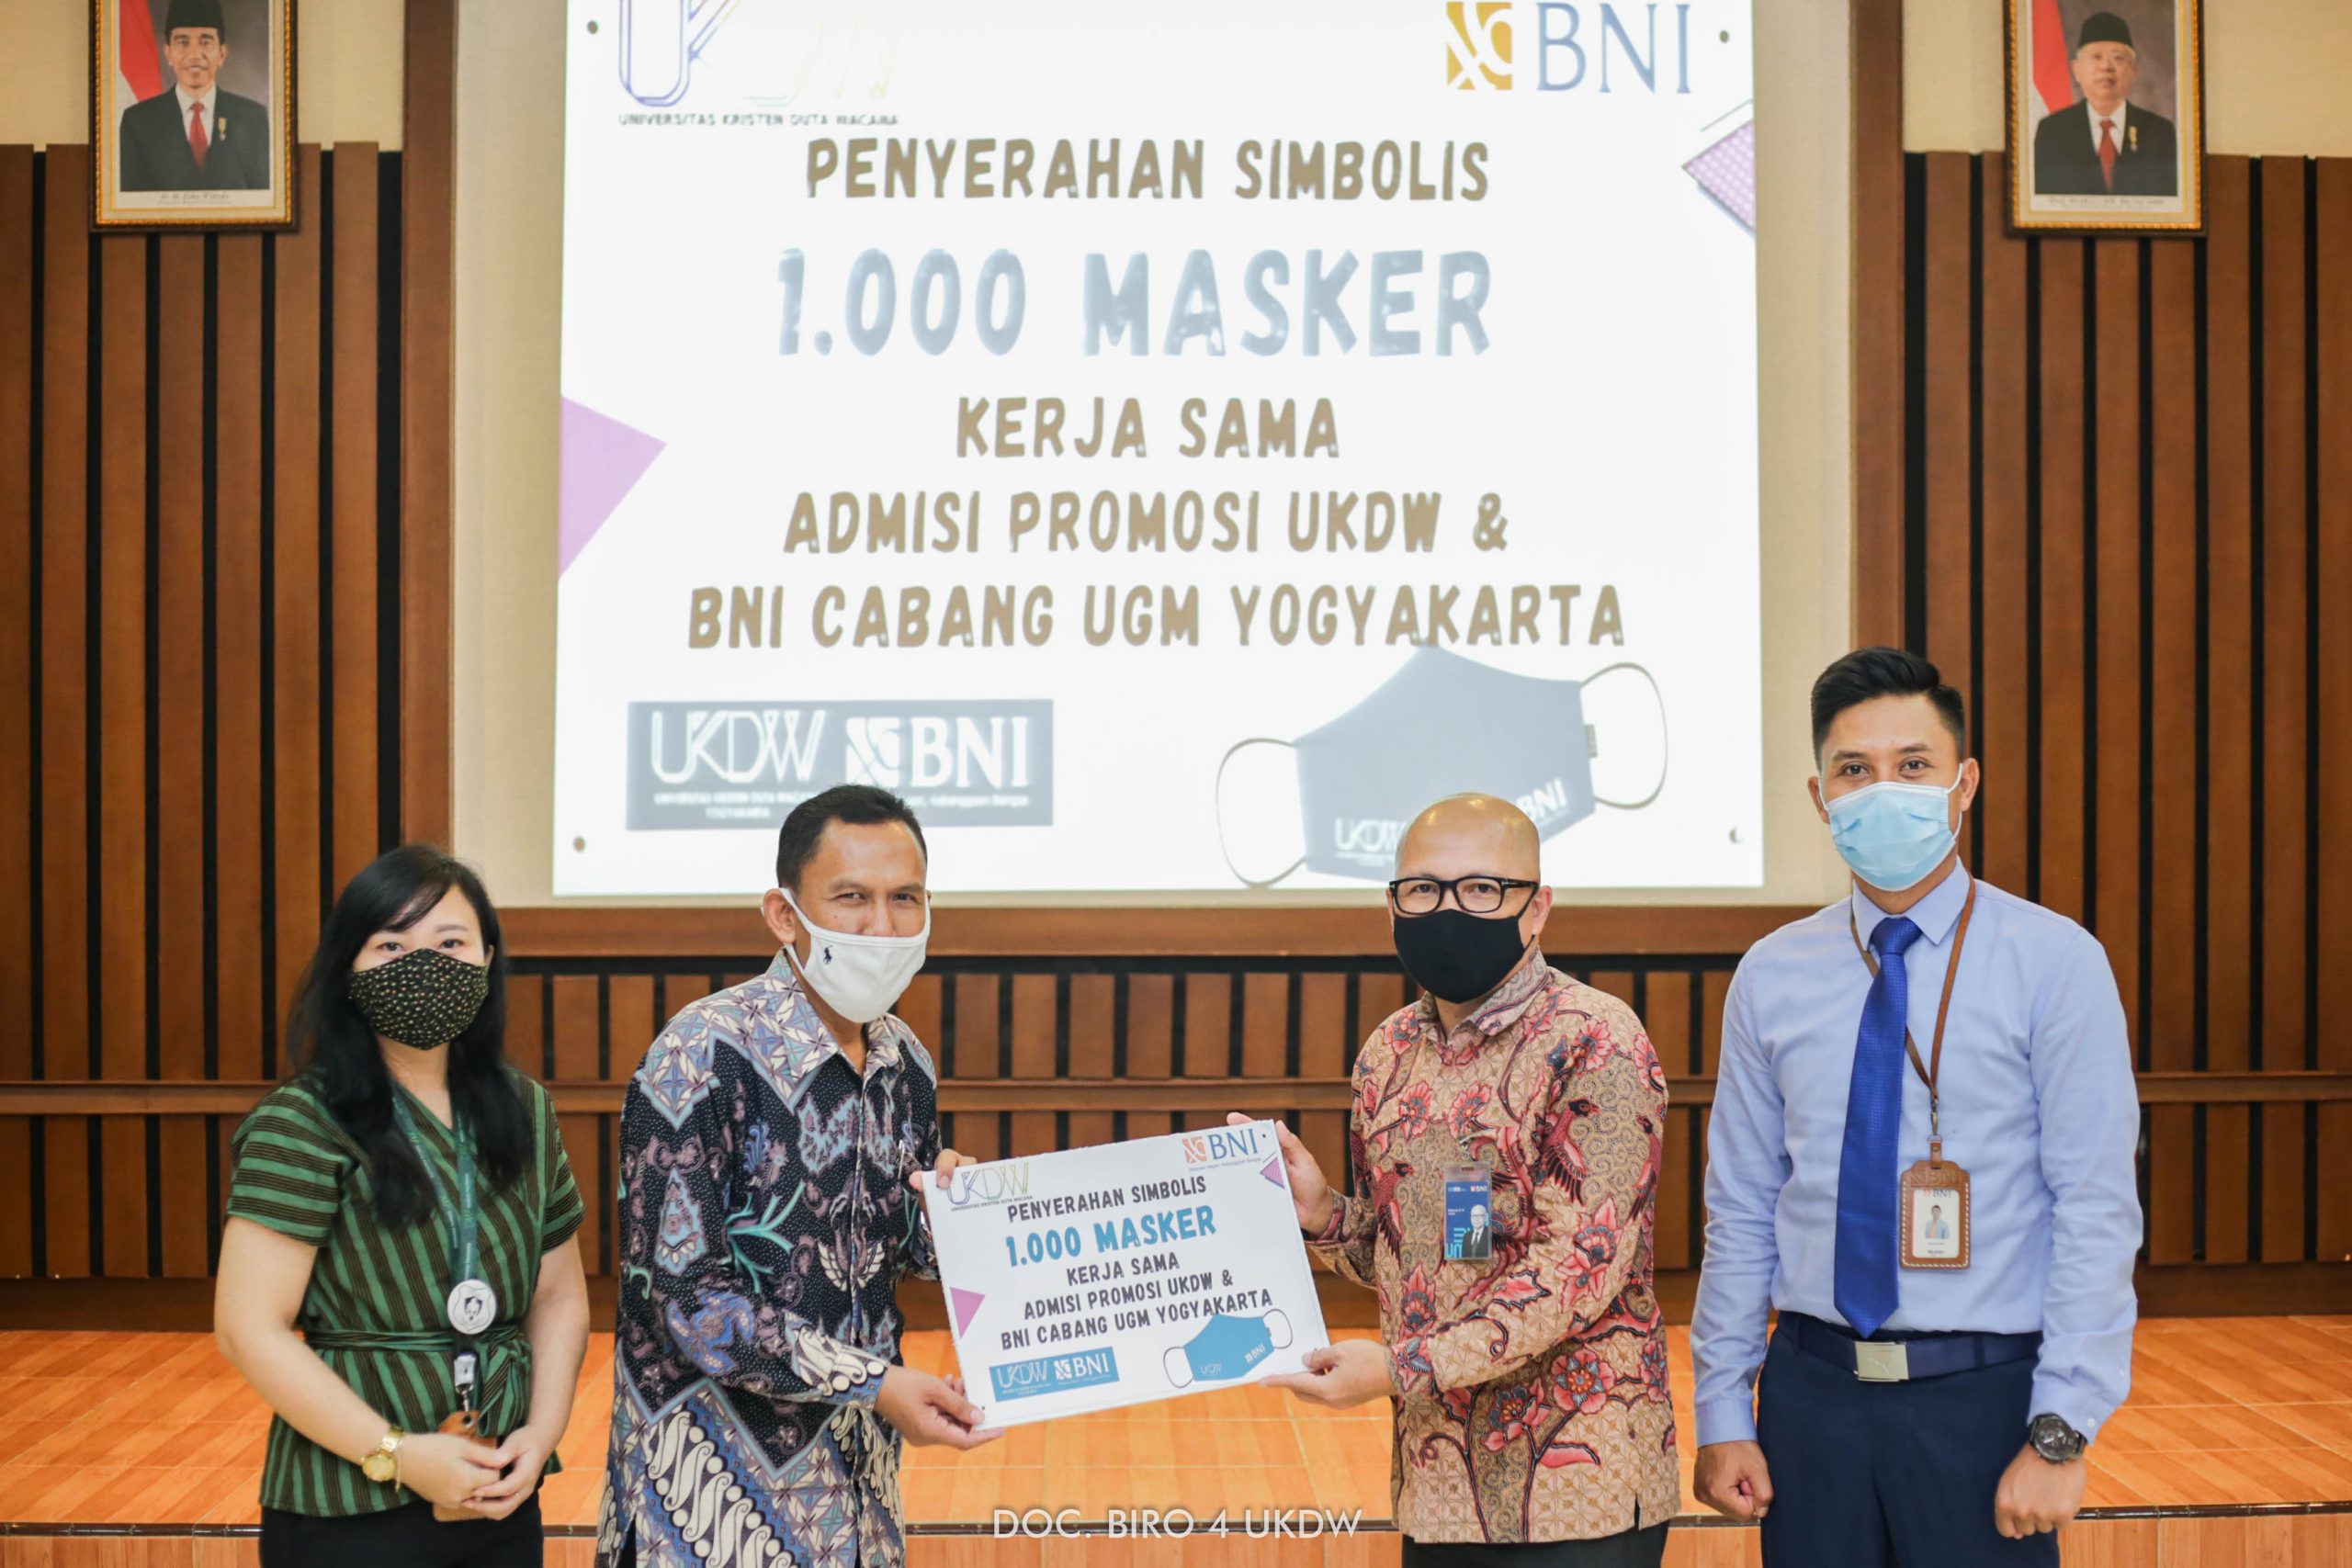 Bantuan 1.000 Masker Ukdw & Bni | Ukdw